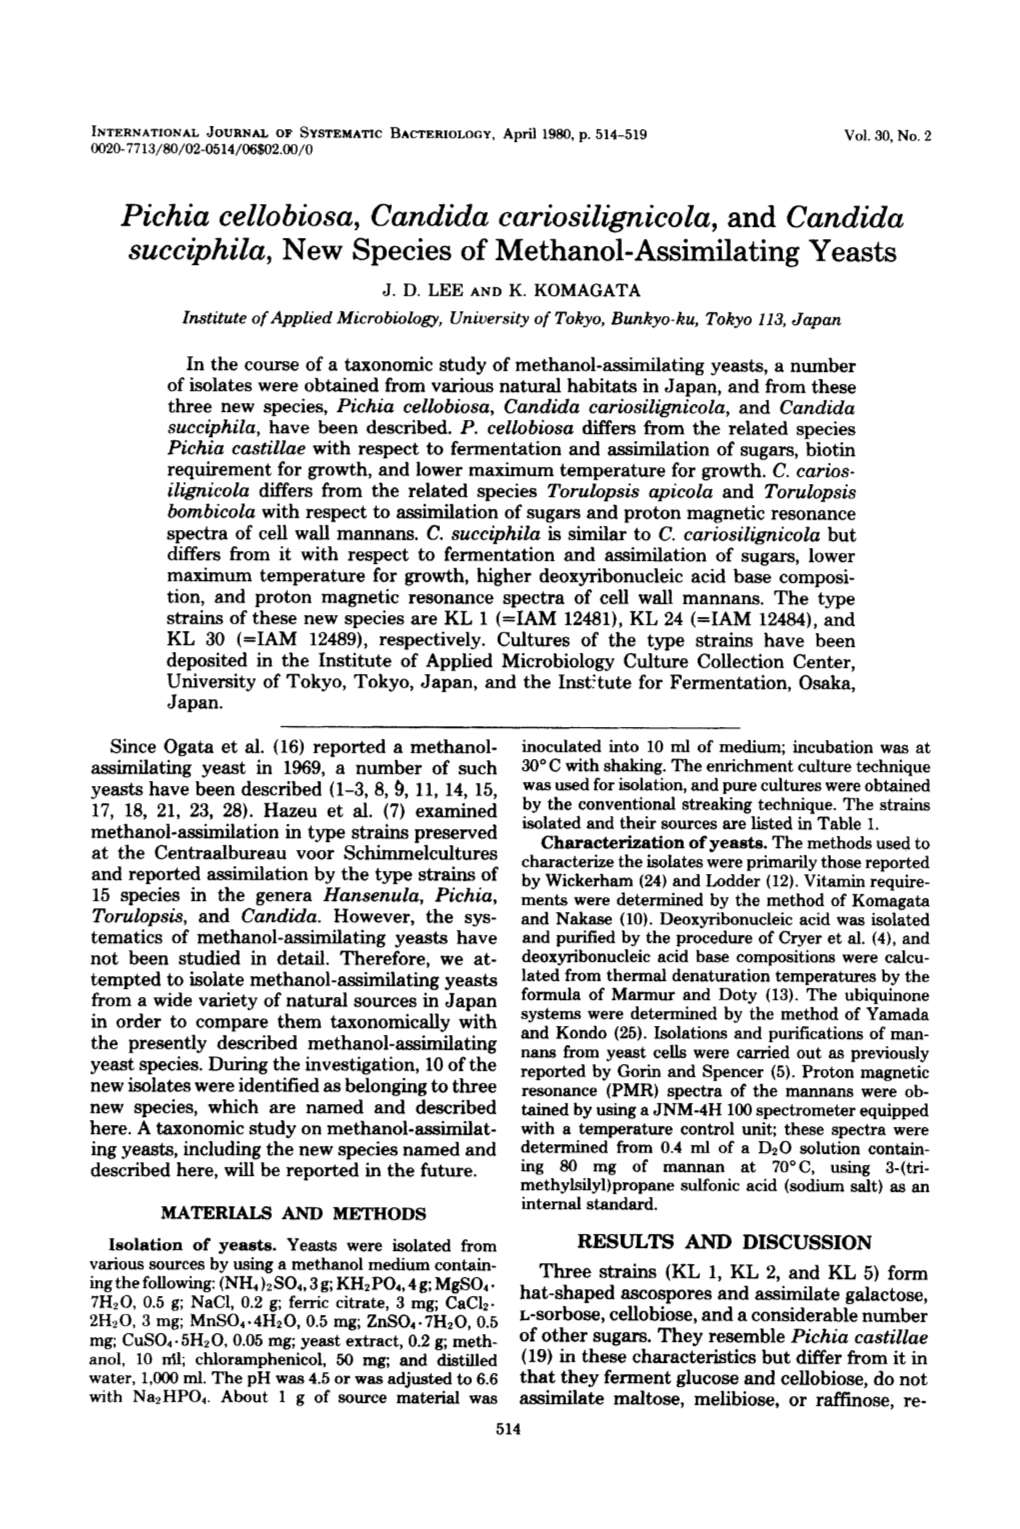 Pichia Cellobiosa, Candida Cariosilignicola, and Candida Succiphila, New Species of Methanol-Assimilating Yeasts